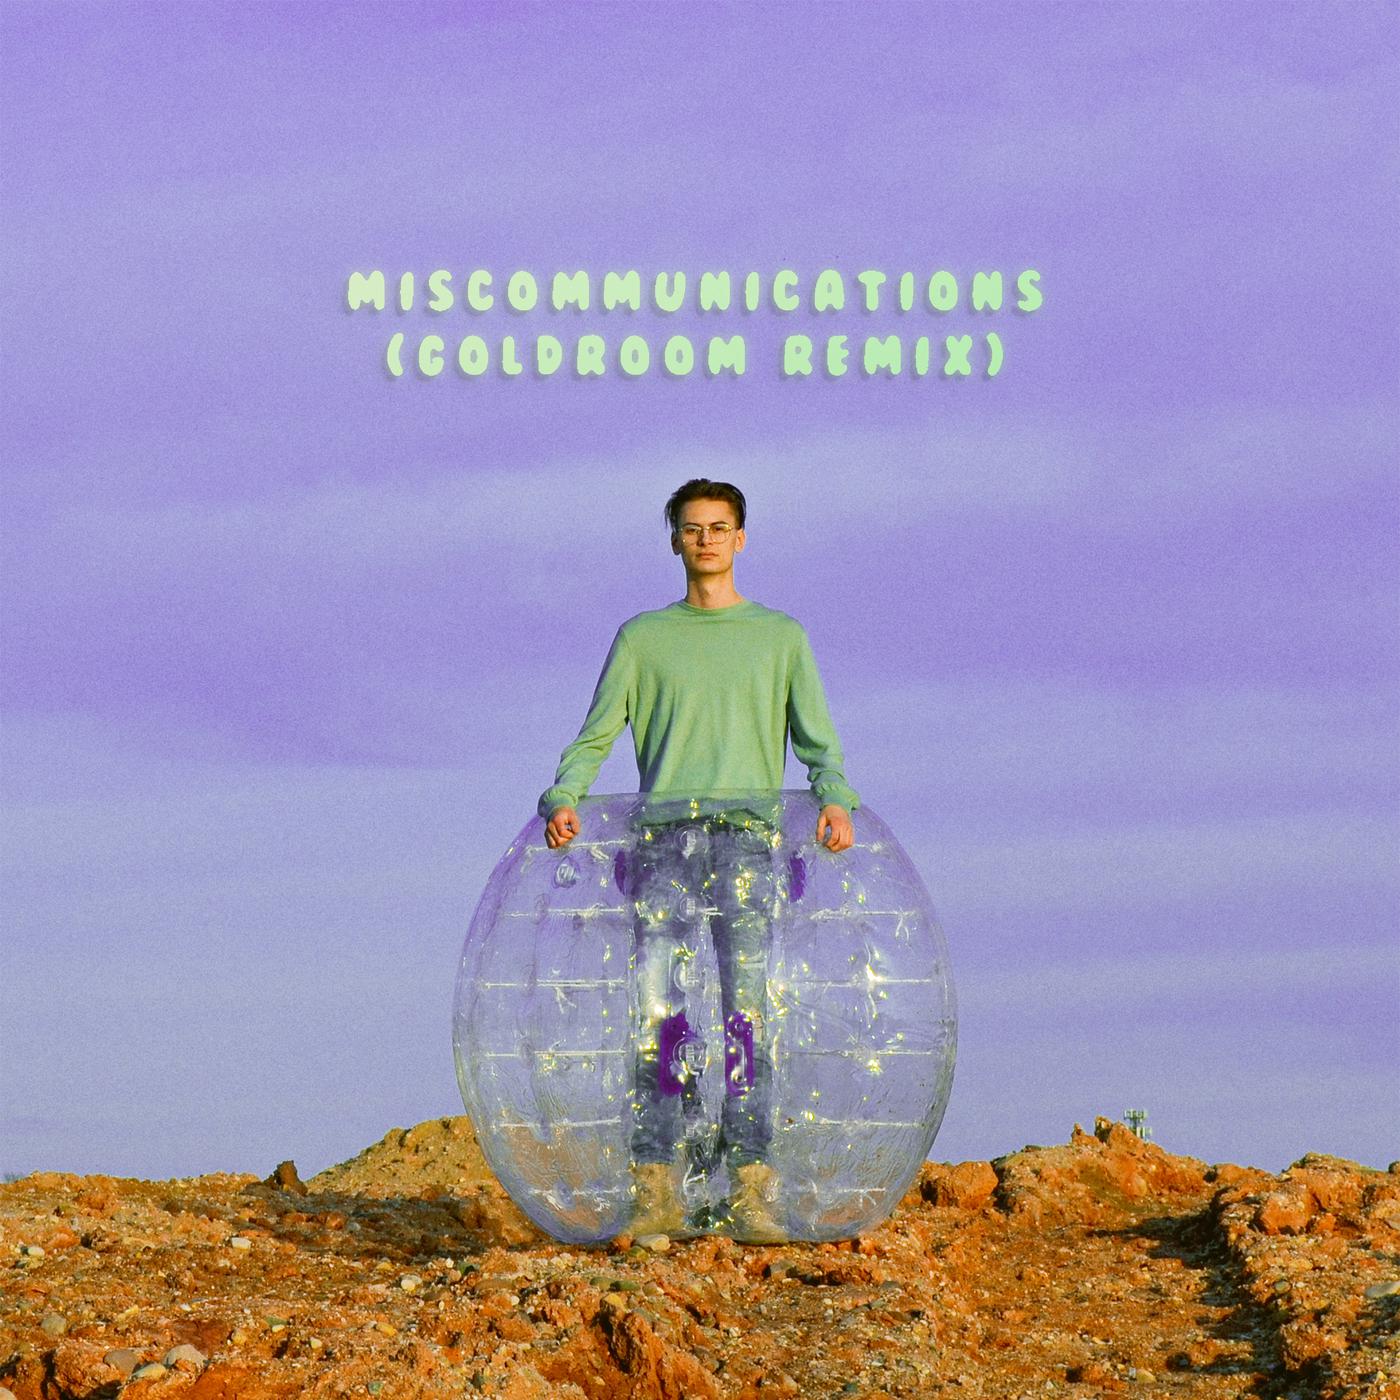 Ant Saunders - MISCOMMUNICATIONS (Goldroom Remix)